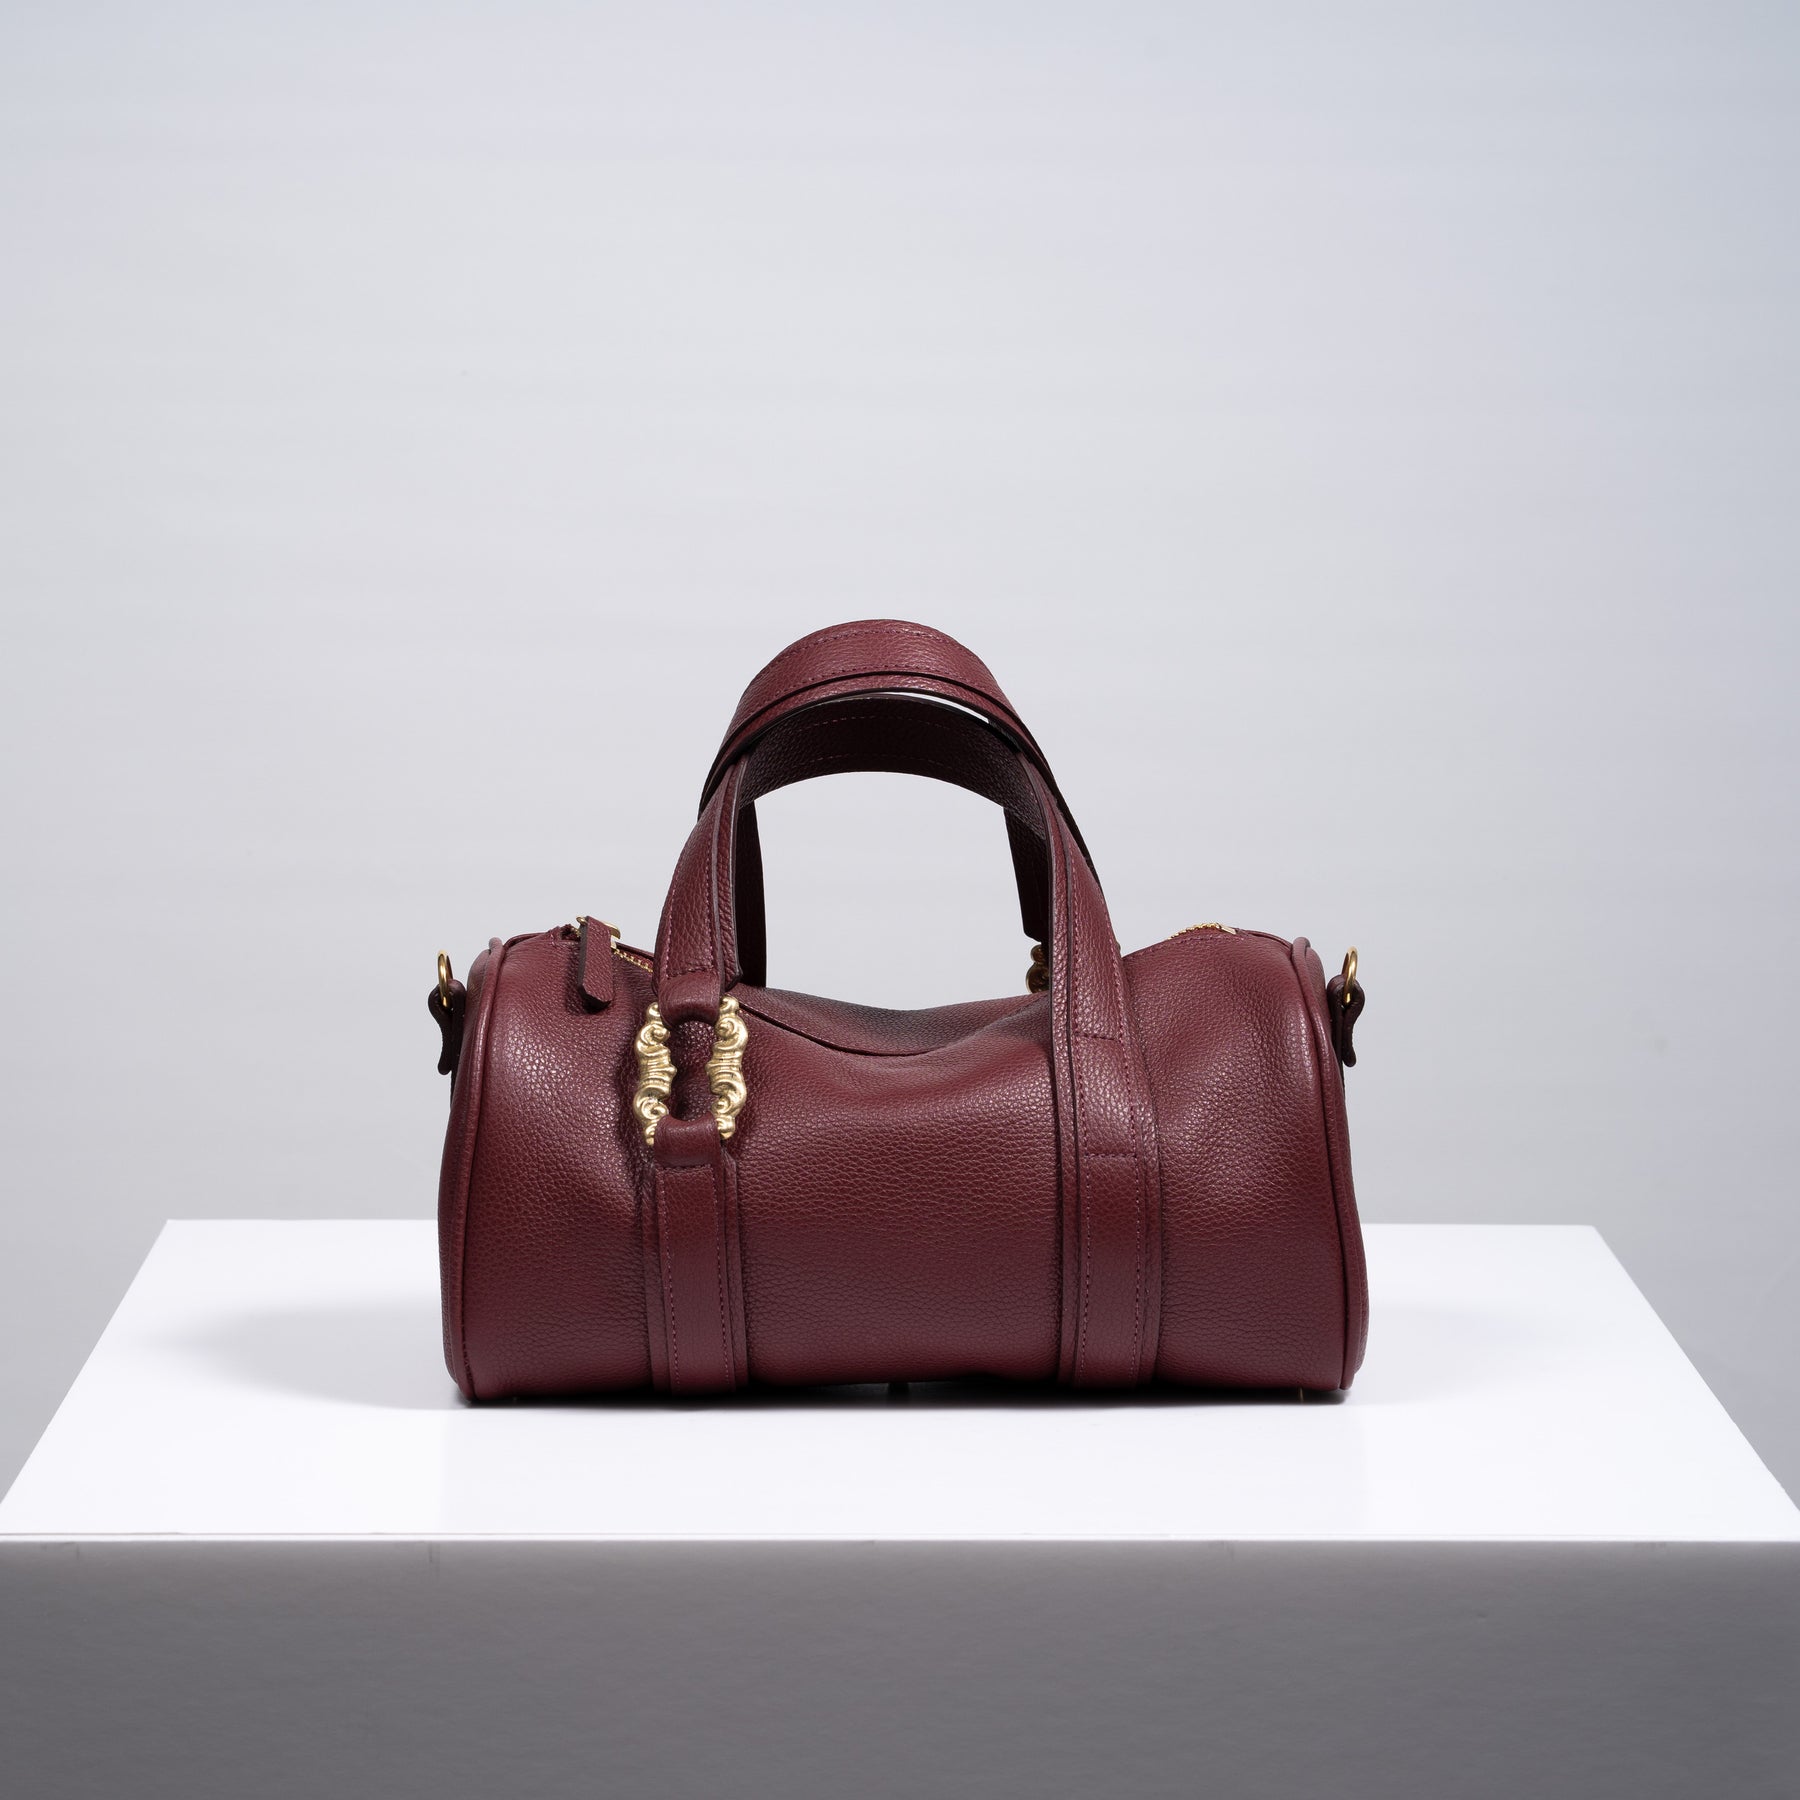 Atena Leather Duffle Bag
- Palissandro